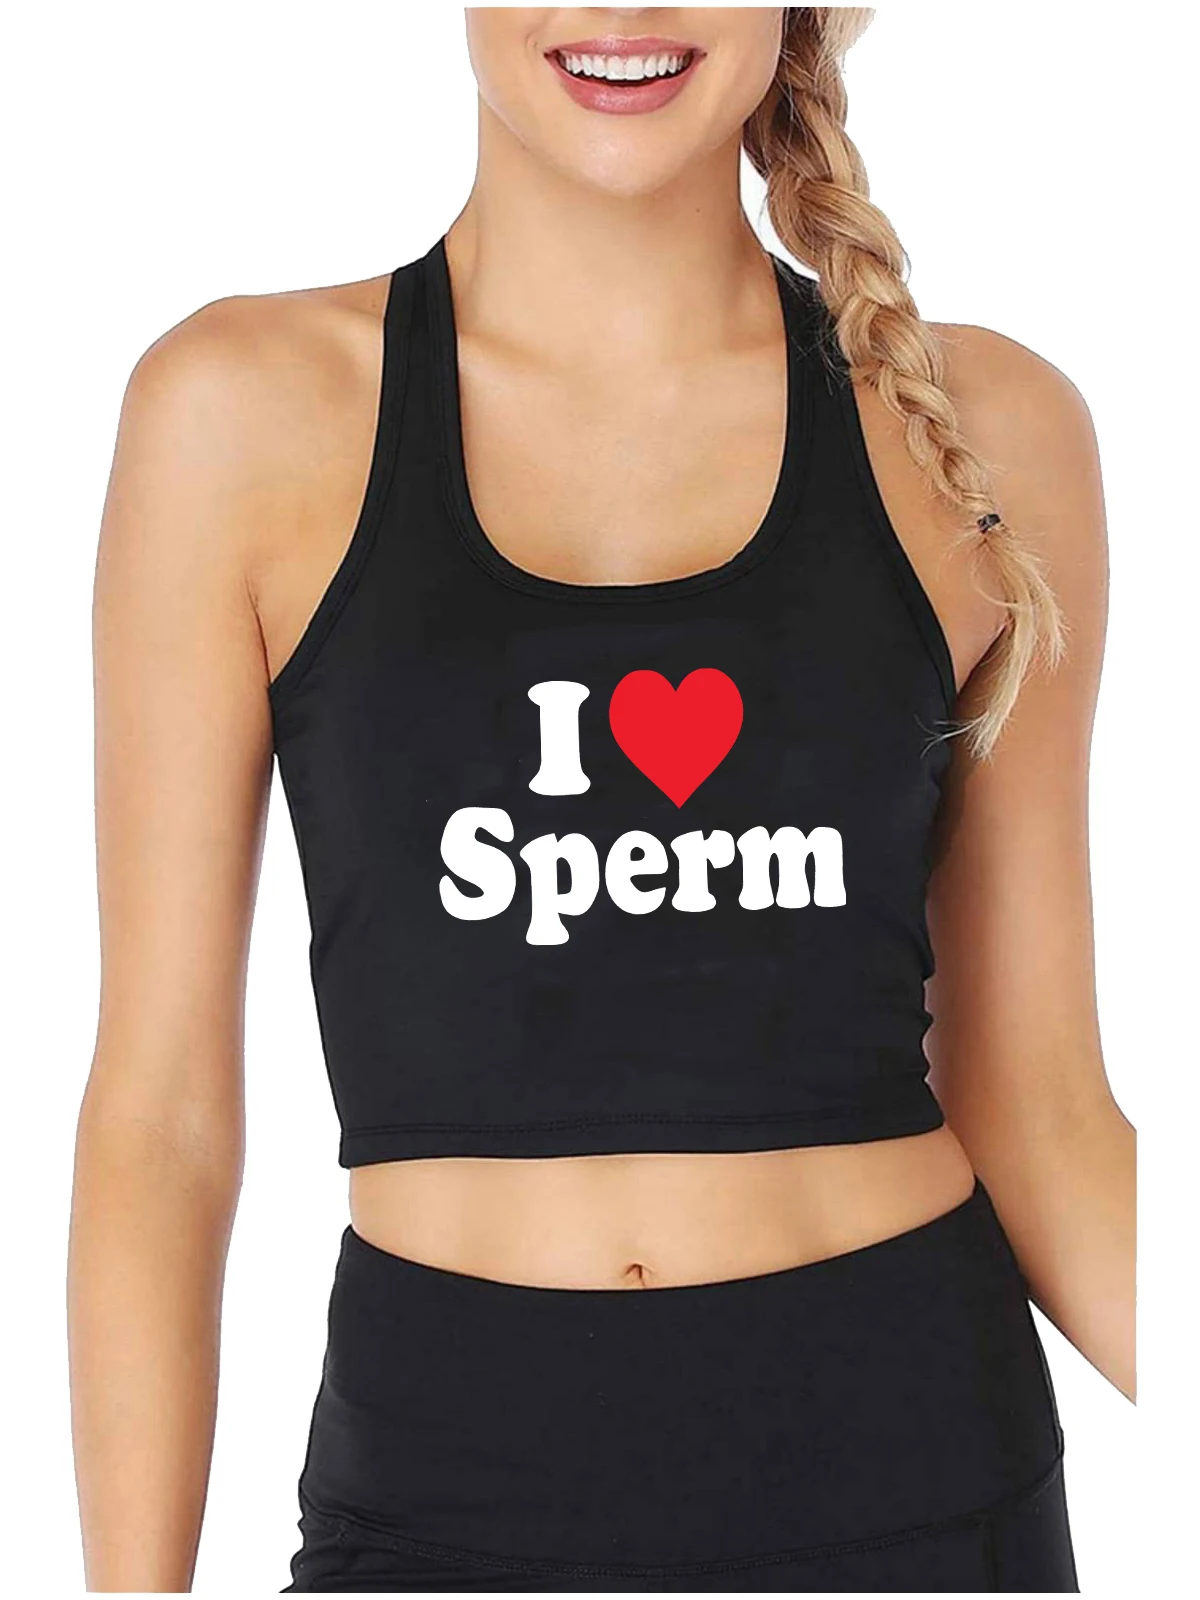 

I Love Sperm Design Sexy Slim Crop Top Hotwife Humorous Fun Flirting Style Tank Tops Swinger Naughty Sports Training Camisole